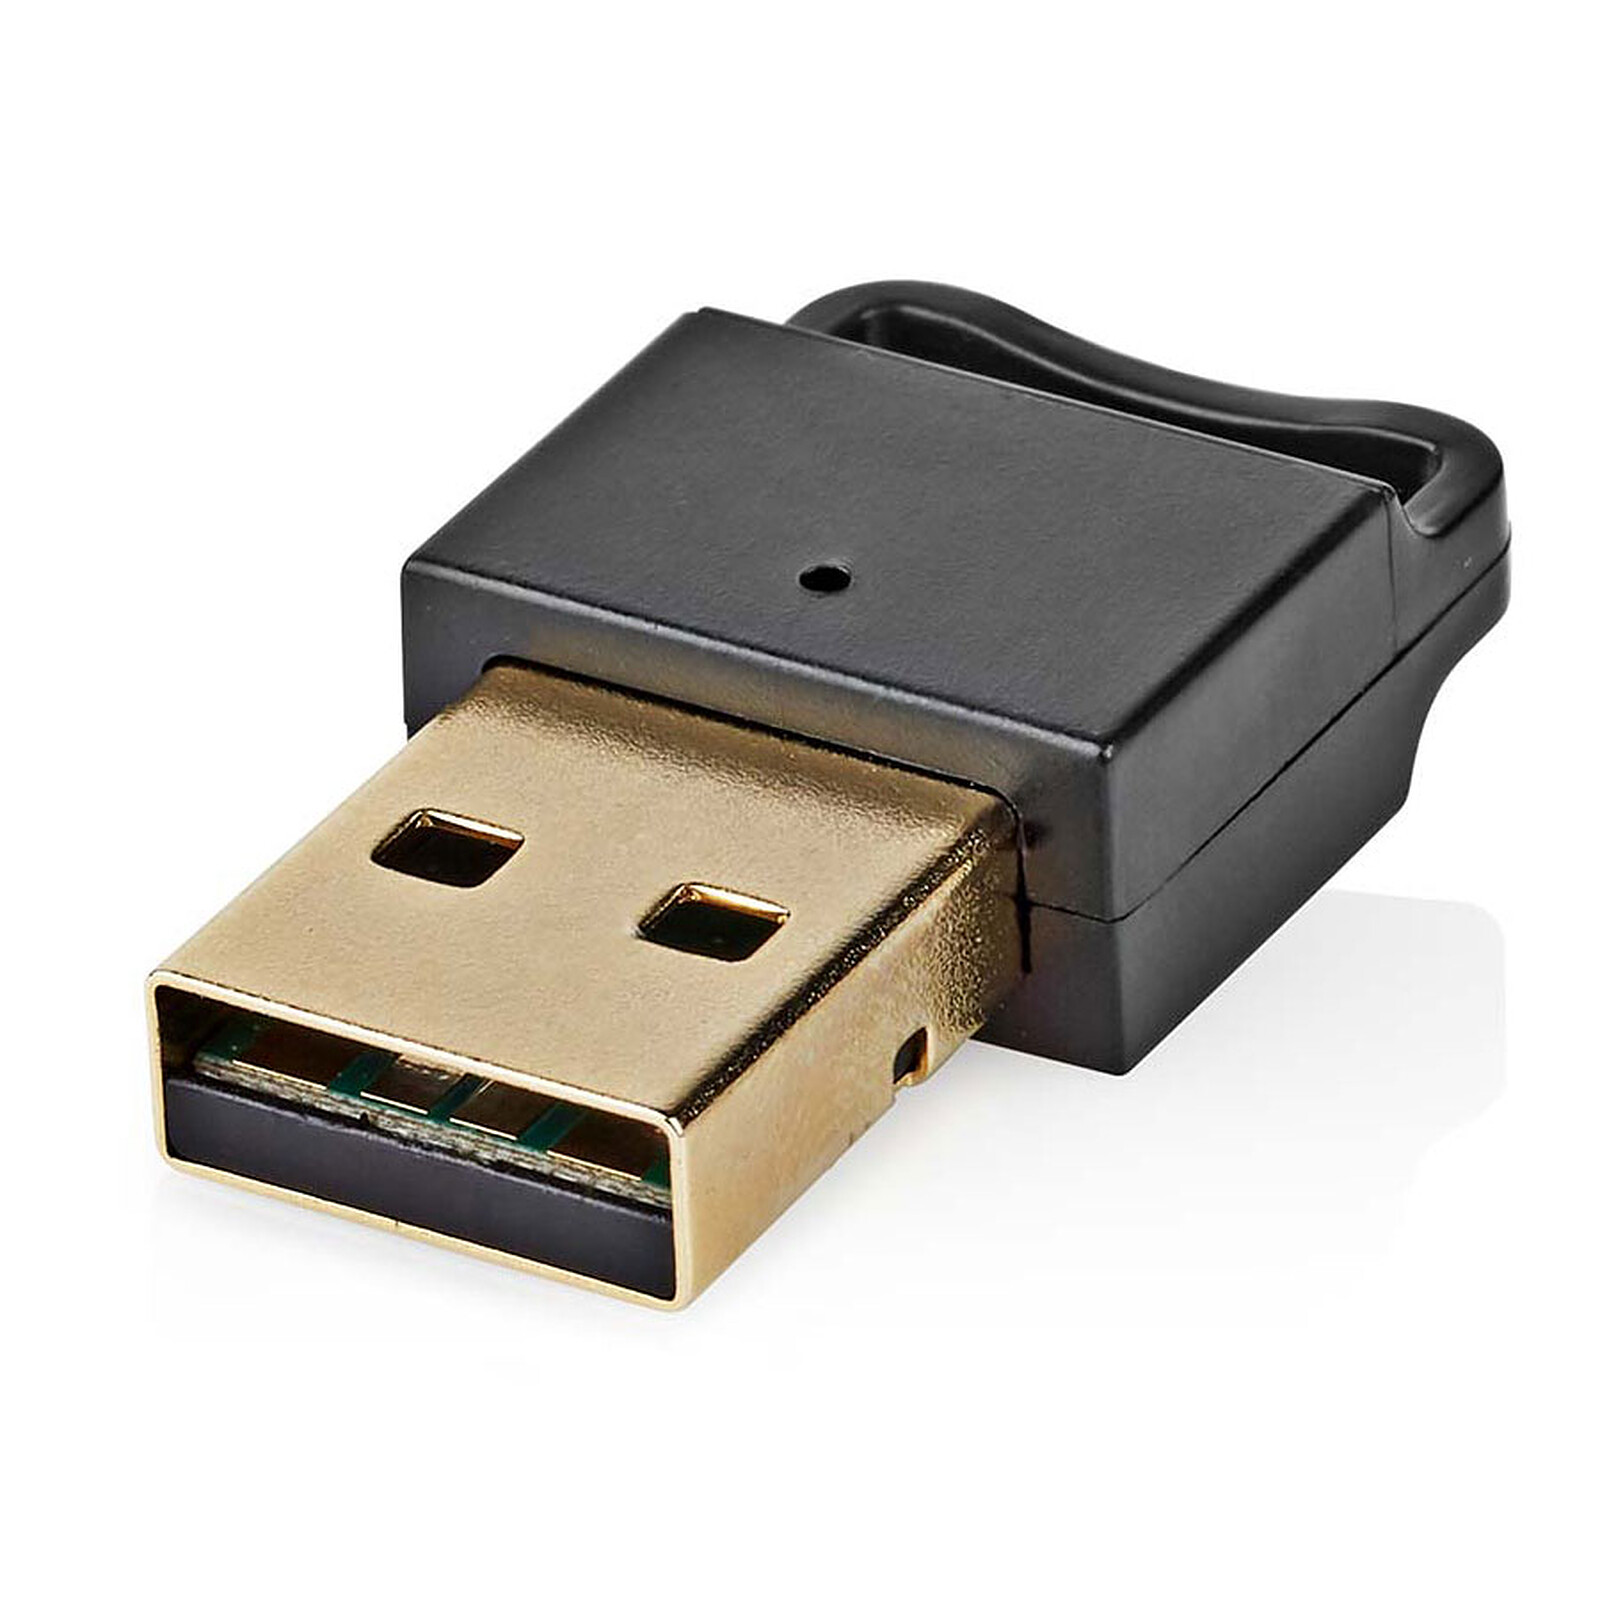 Nedis Dongle Micro USB Bluetooth 5.0 - Connecteur bluetooth - Garantie 3  ans LDLC